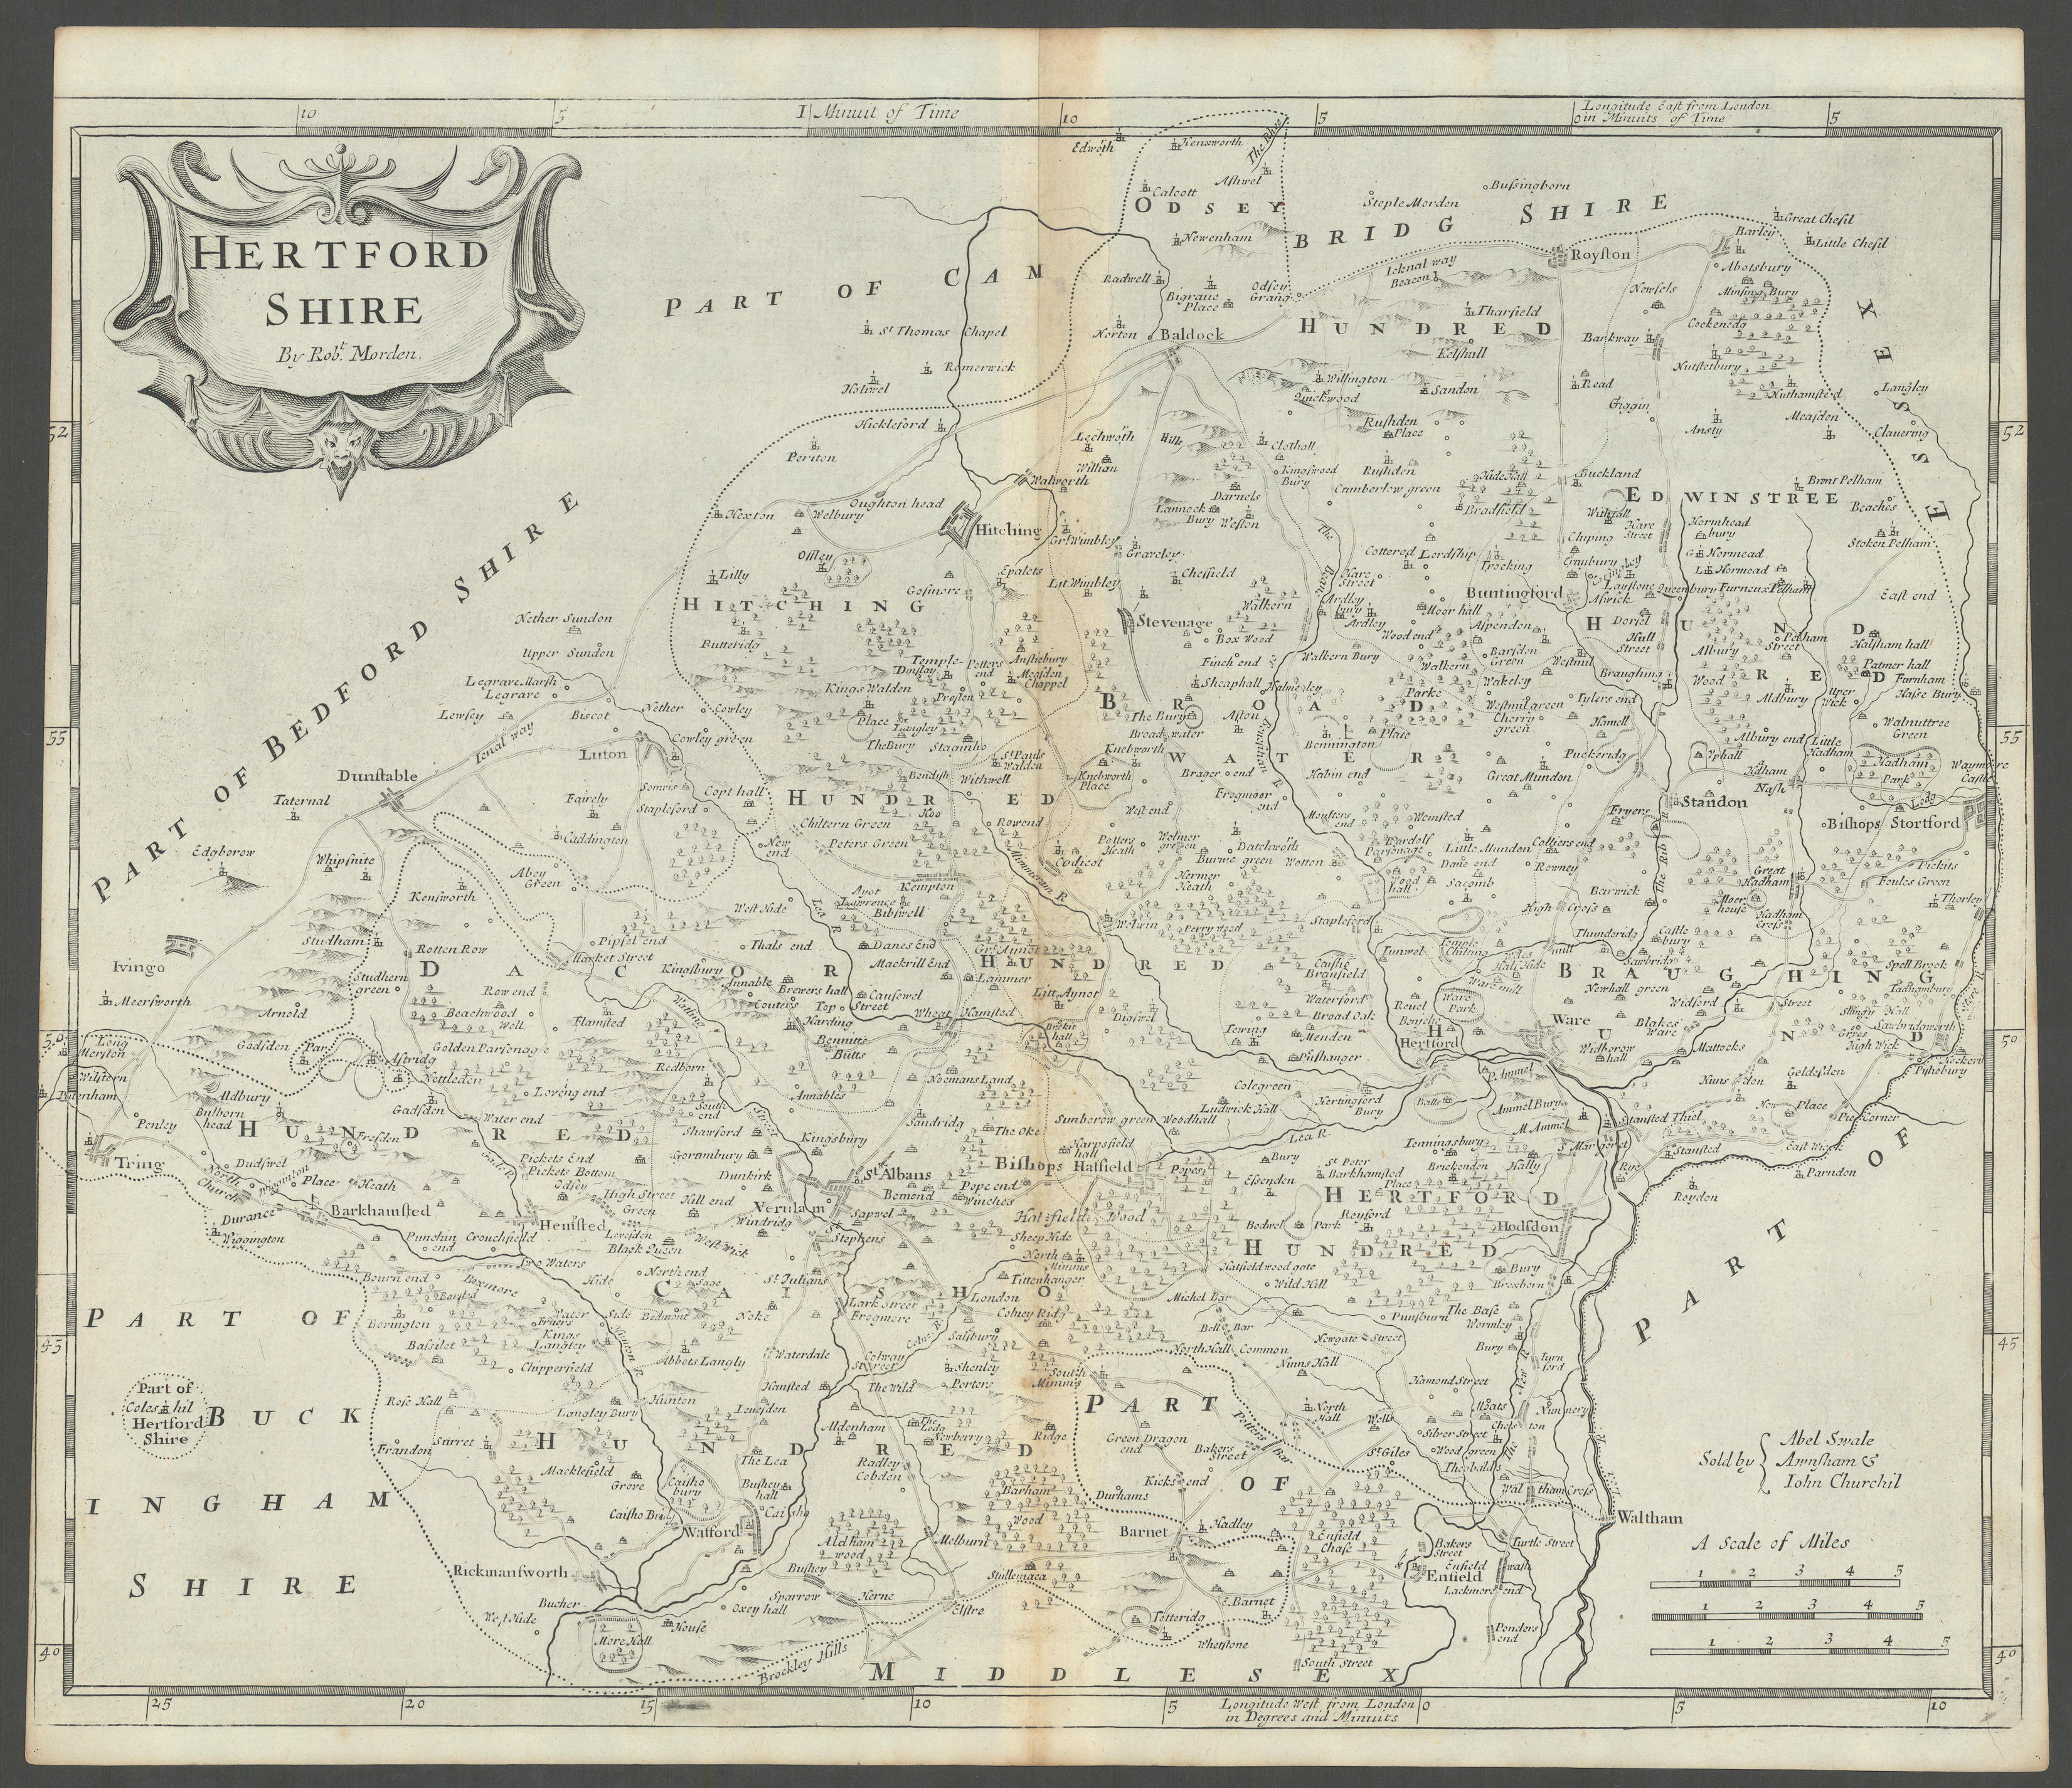 Associate Product Hertfordshire. 'HERTFORD SHIRE' by ROBERT MORDEN in Camden's Britannia 1722 map